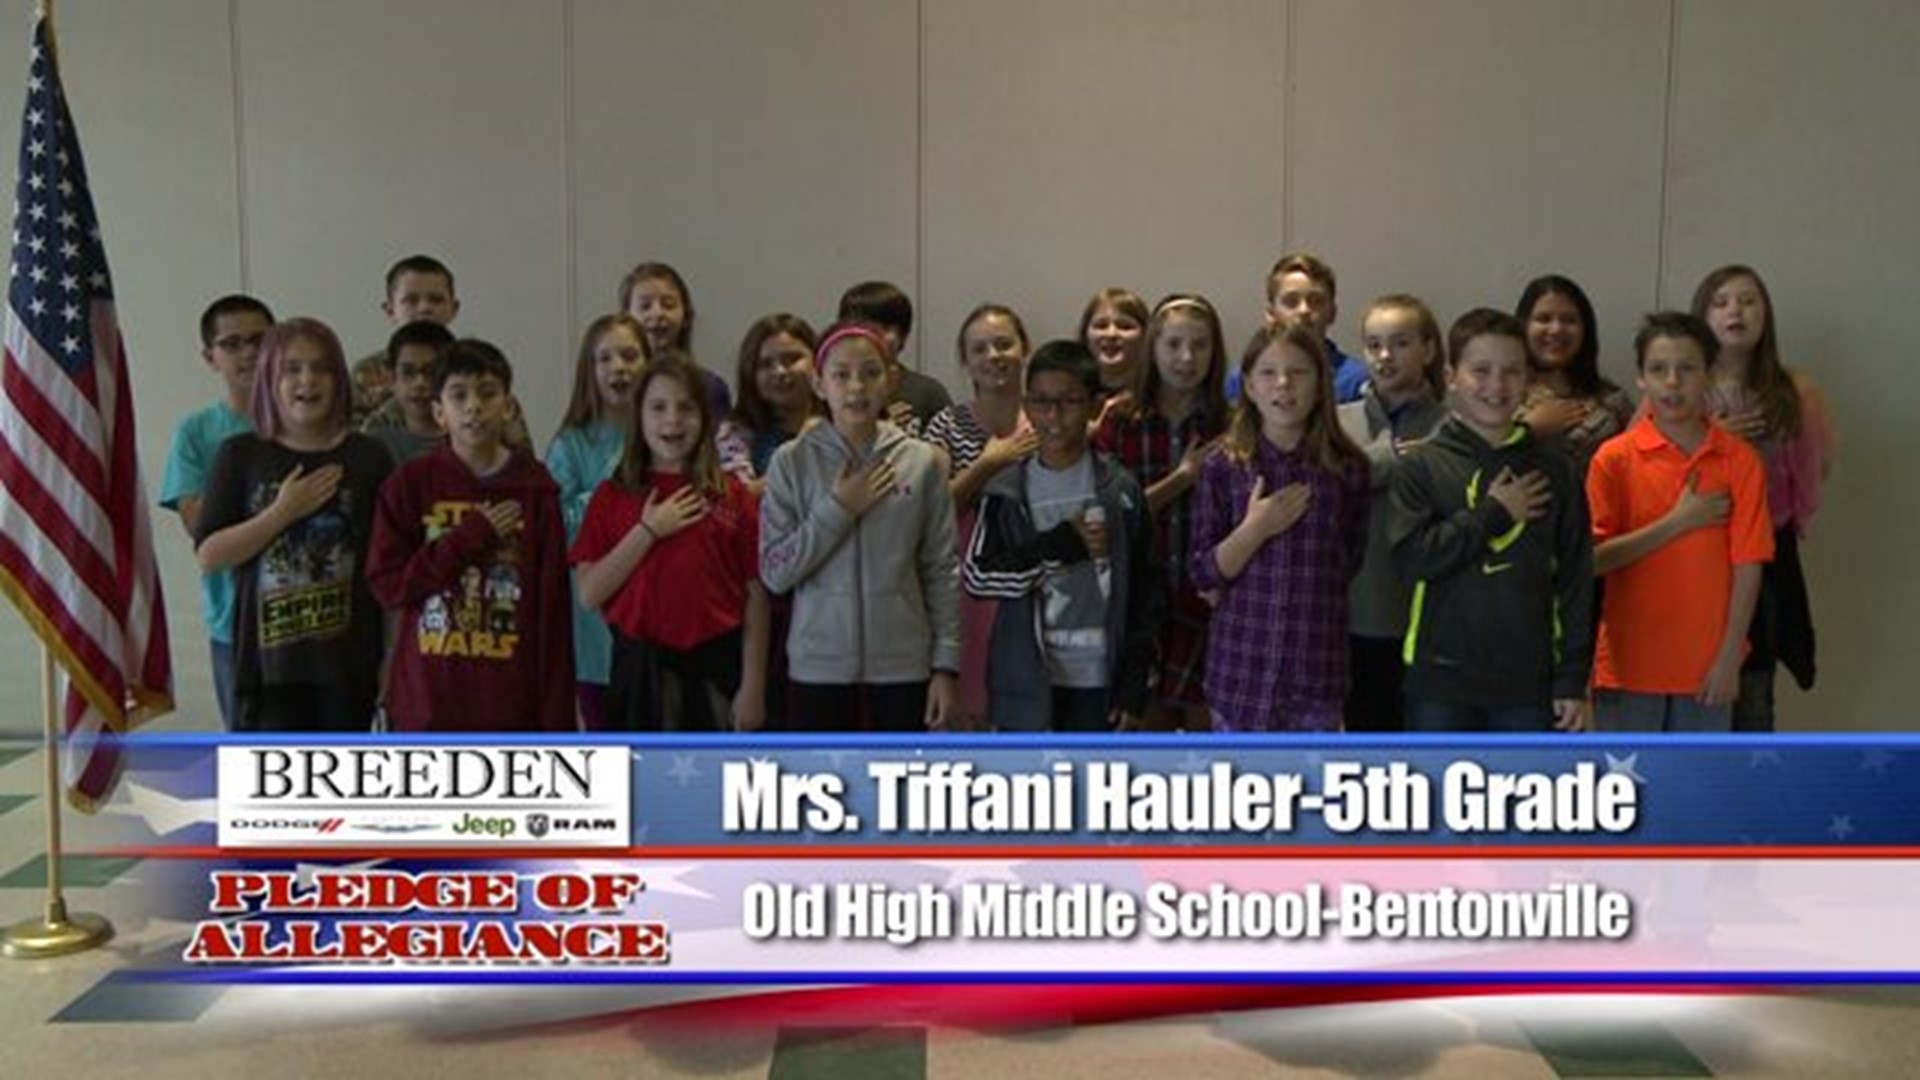 Old High Middle School, Bentonville - Mrs. Tiffain Hauler - 5th Grade